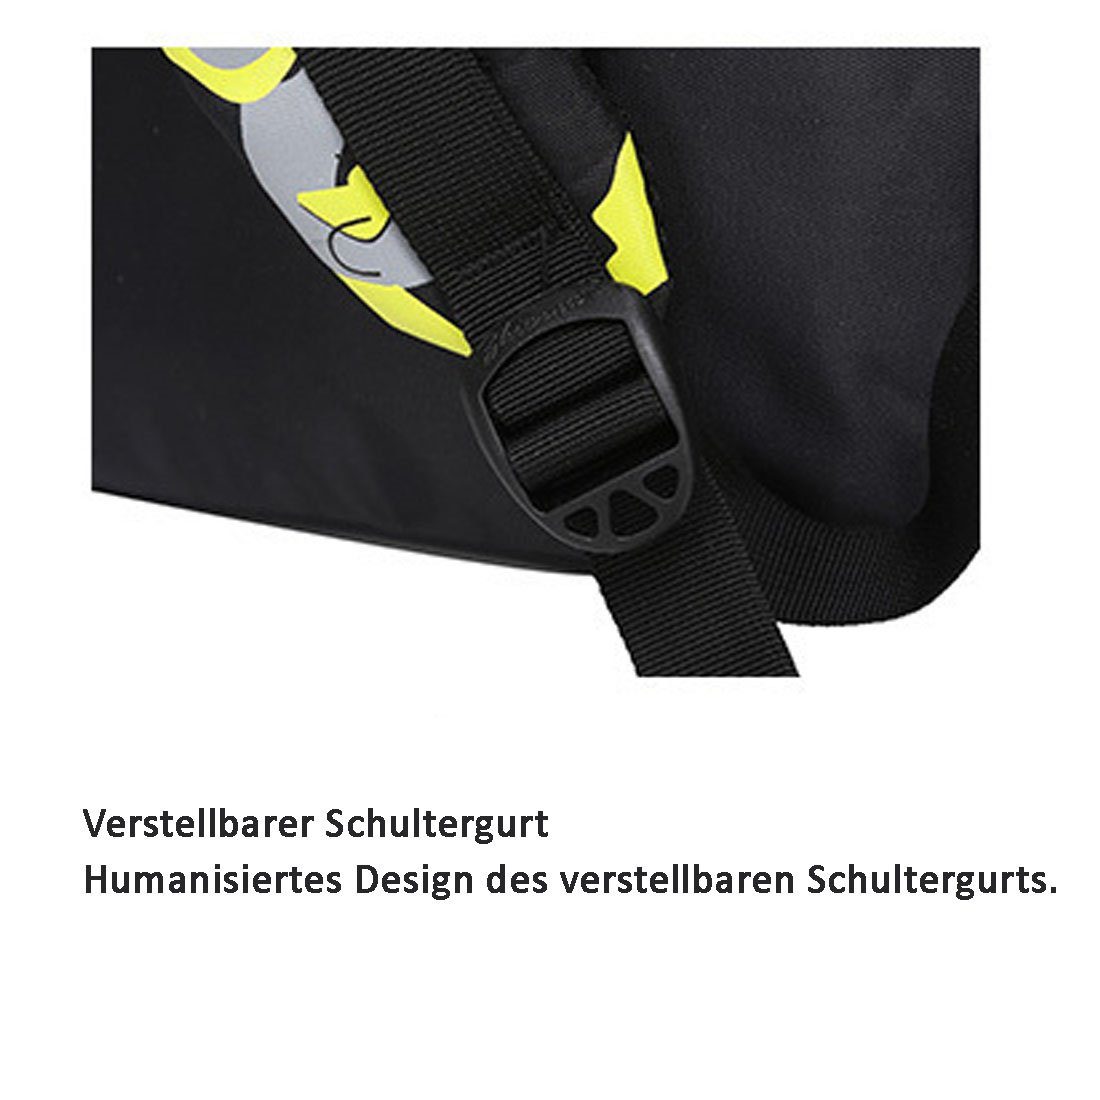 3 gedruckt Kinder Backpack DÖRÖY grün Stück Student Set, Schulranzen Camouflage Schulrucksack